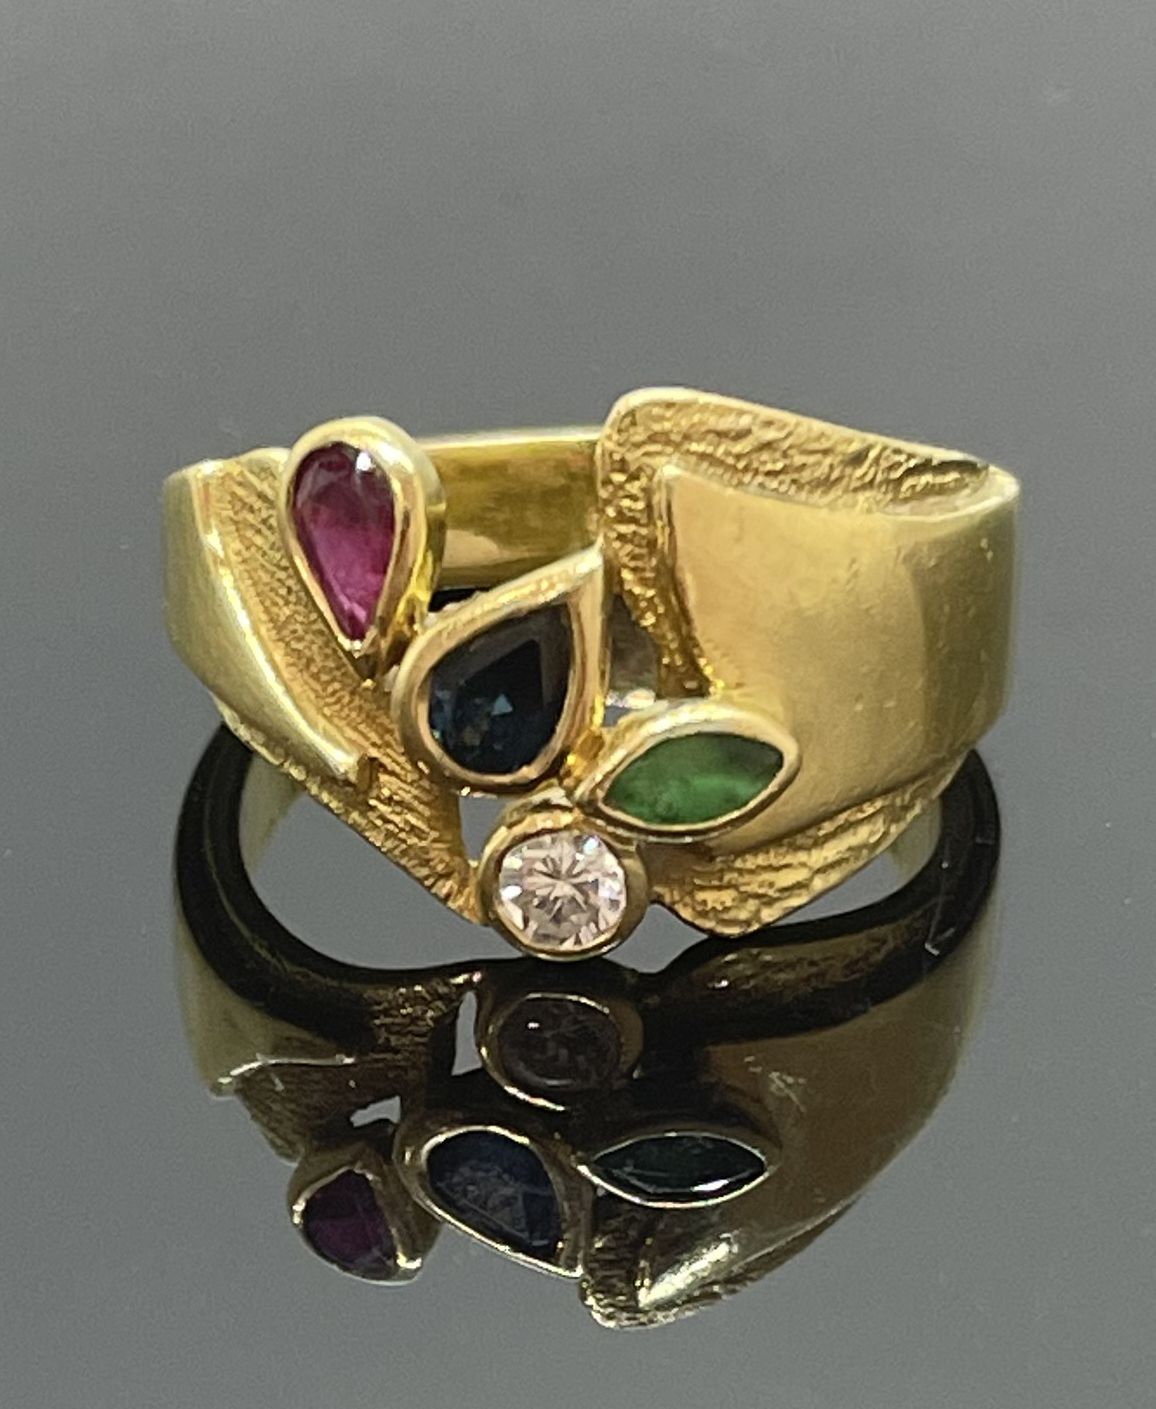 Null 750密耳黄金原版戒指，部分镶嵌红宝石、蓝宝石、梨形绿宝石和一颗明亮式切割钻石。毛重7.5g TDD 52/53